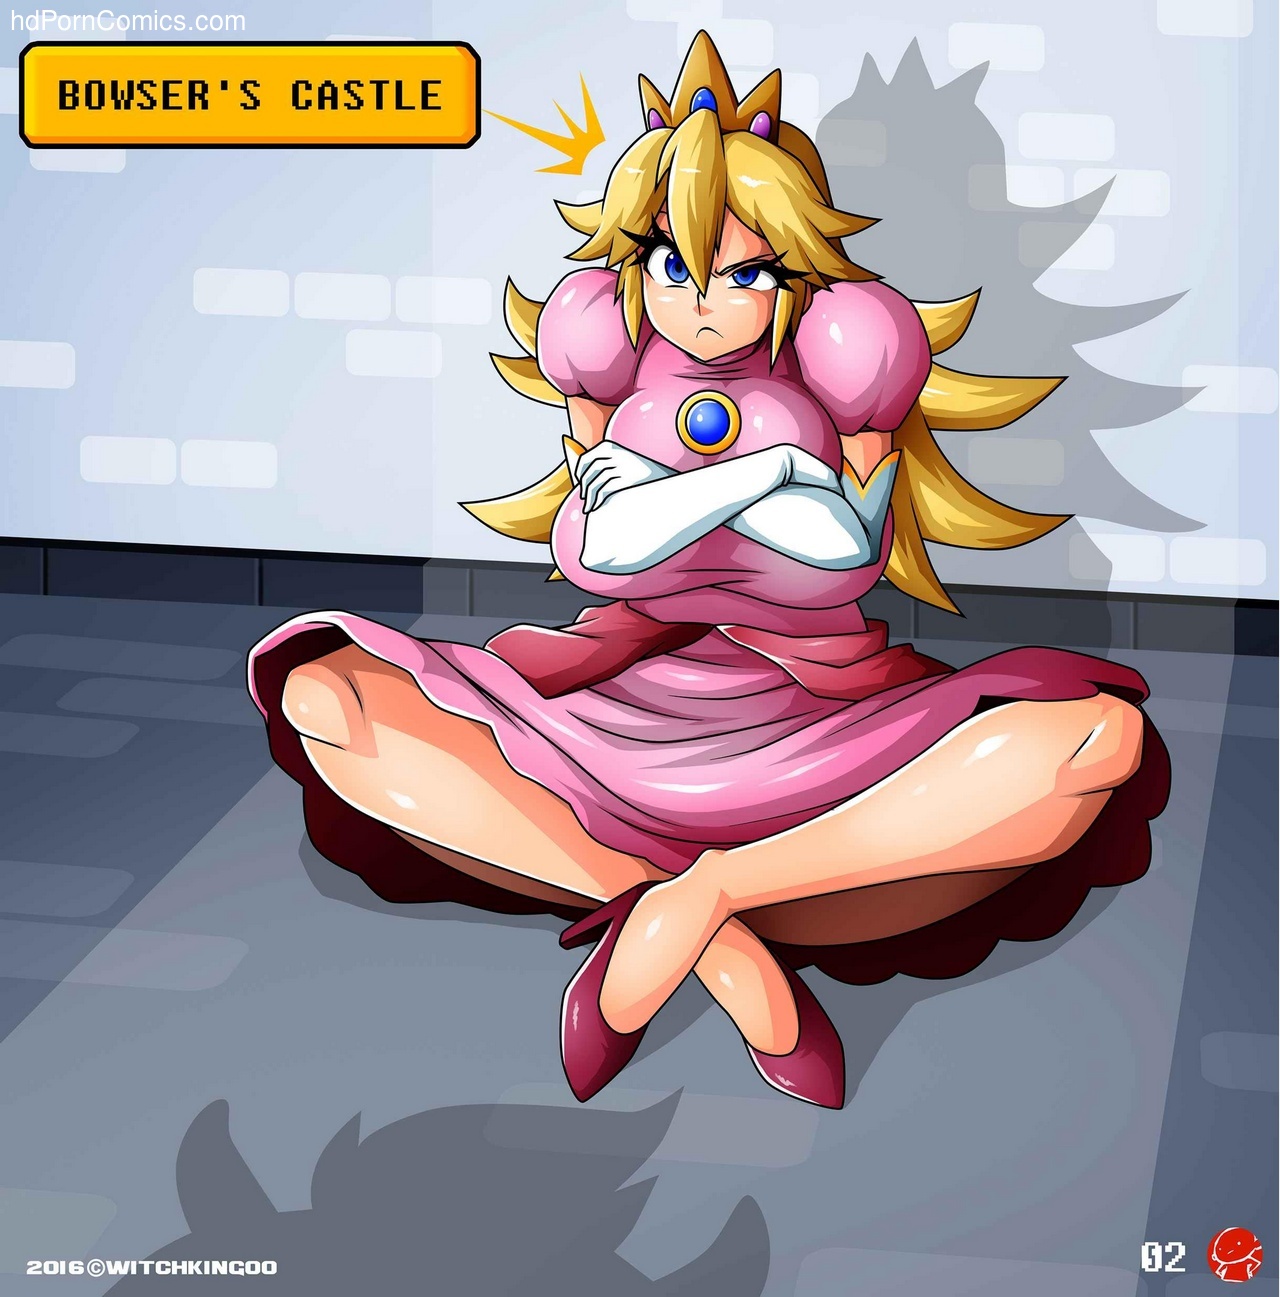 Girl Bowser Porn - Princess Peach - Help Me Mario! Sex Comic â€“ HD Porn Comics